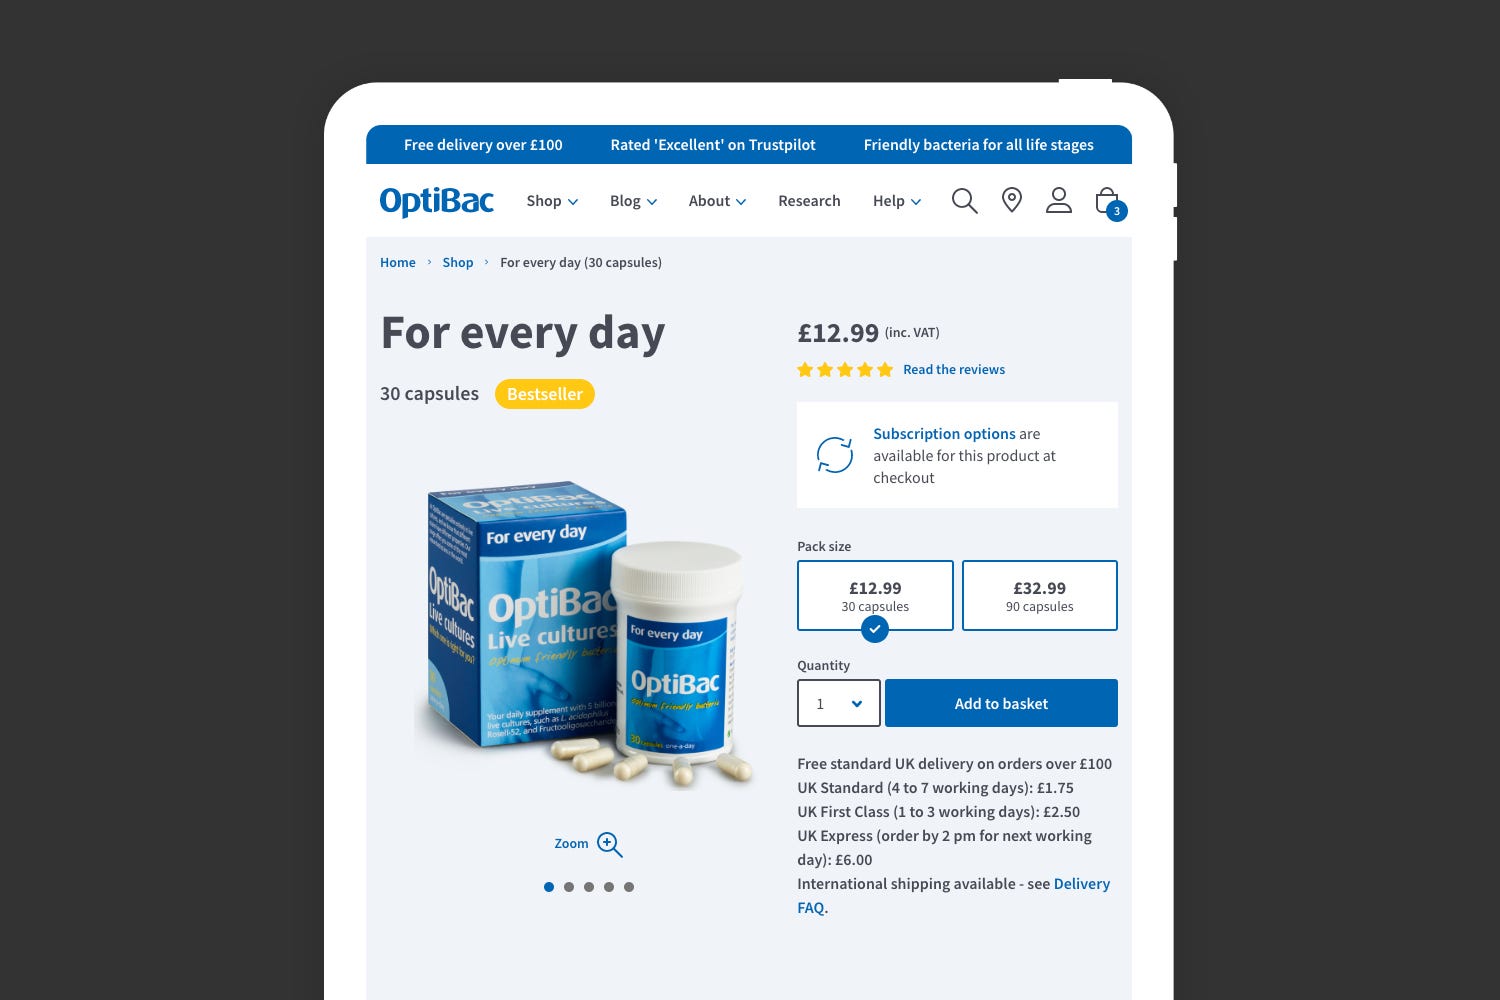 OptiBac product page